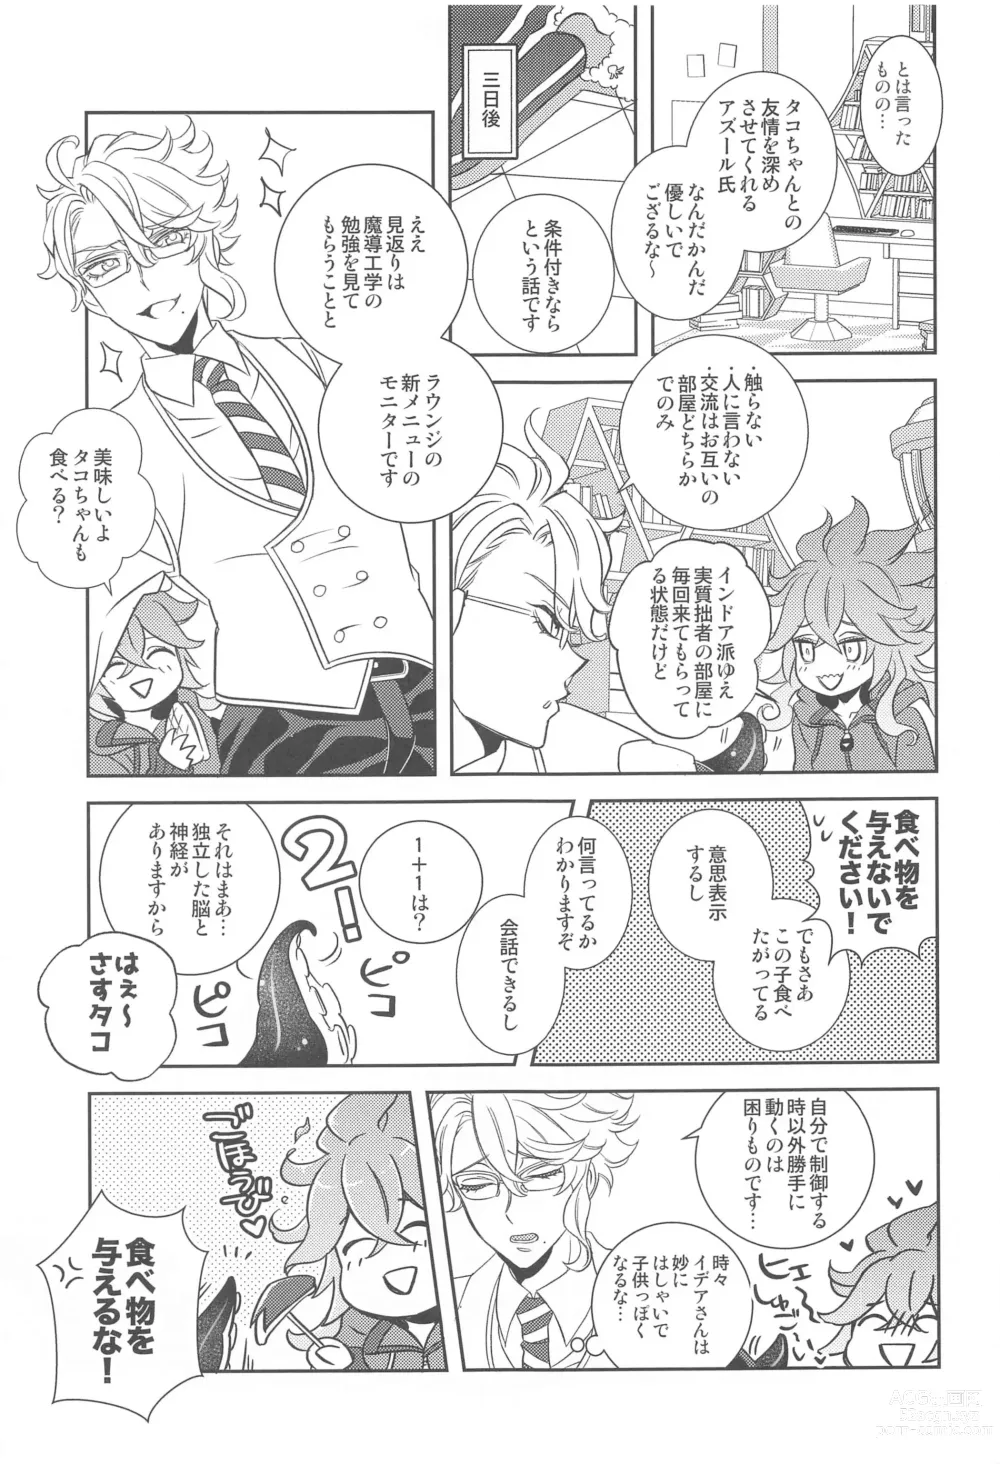 Page 6 of doujinshi Tail!